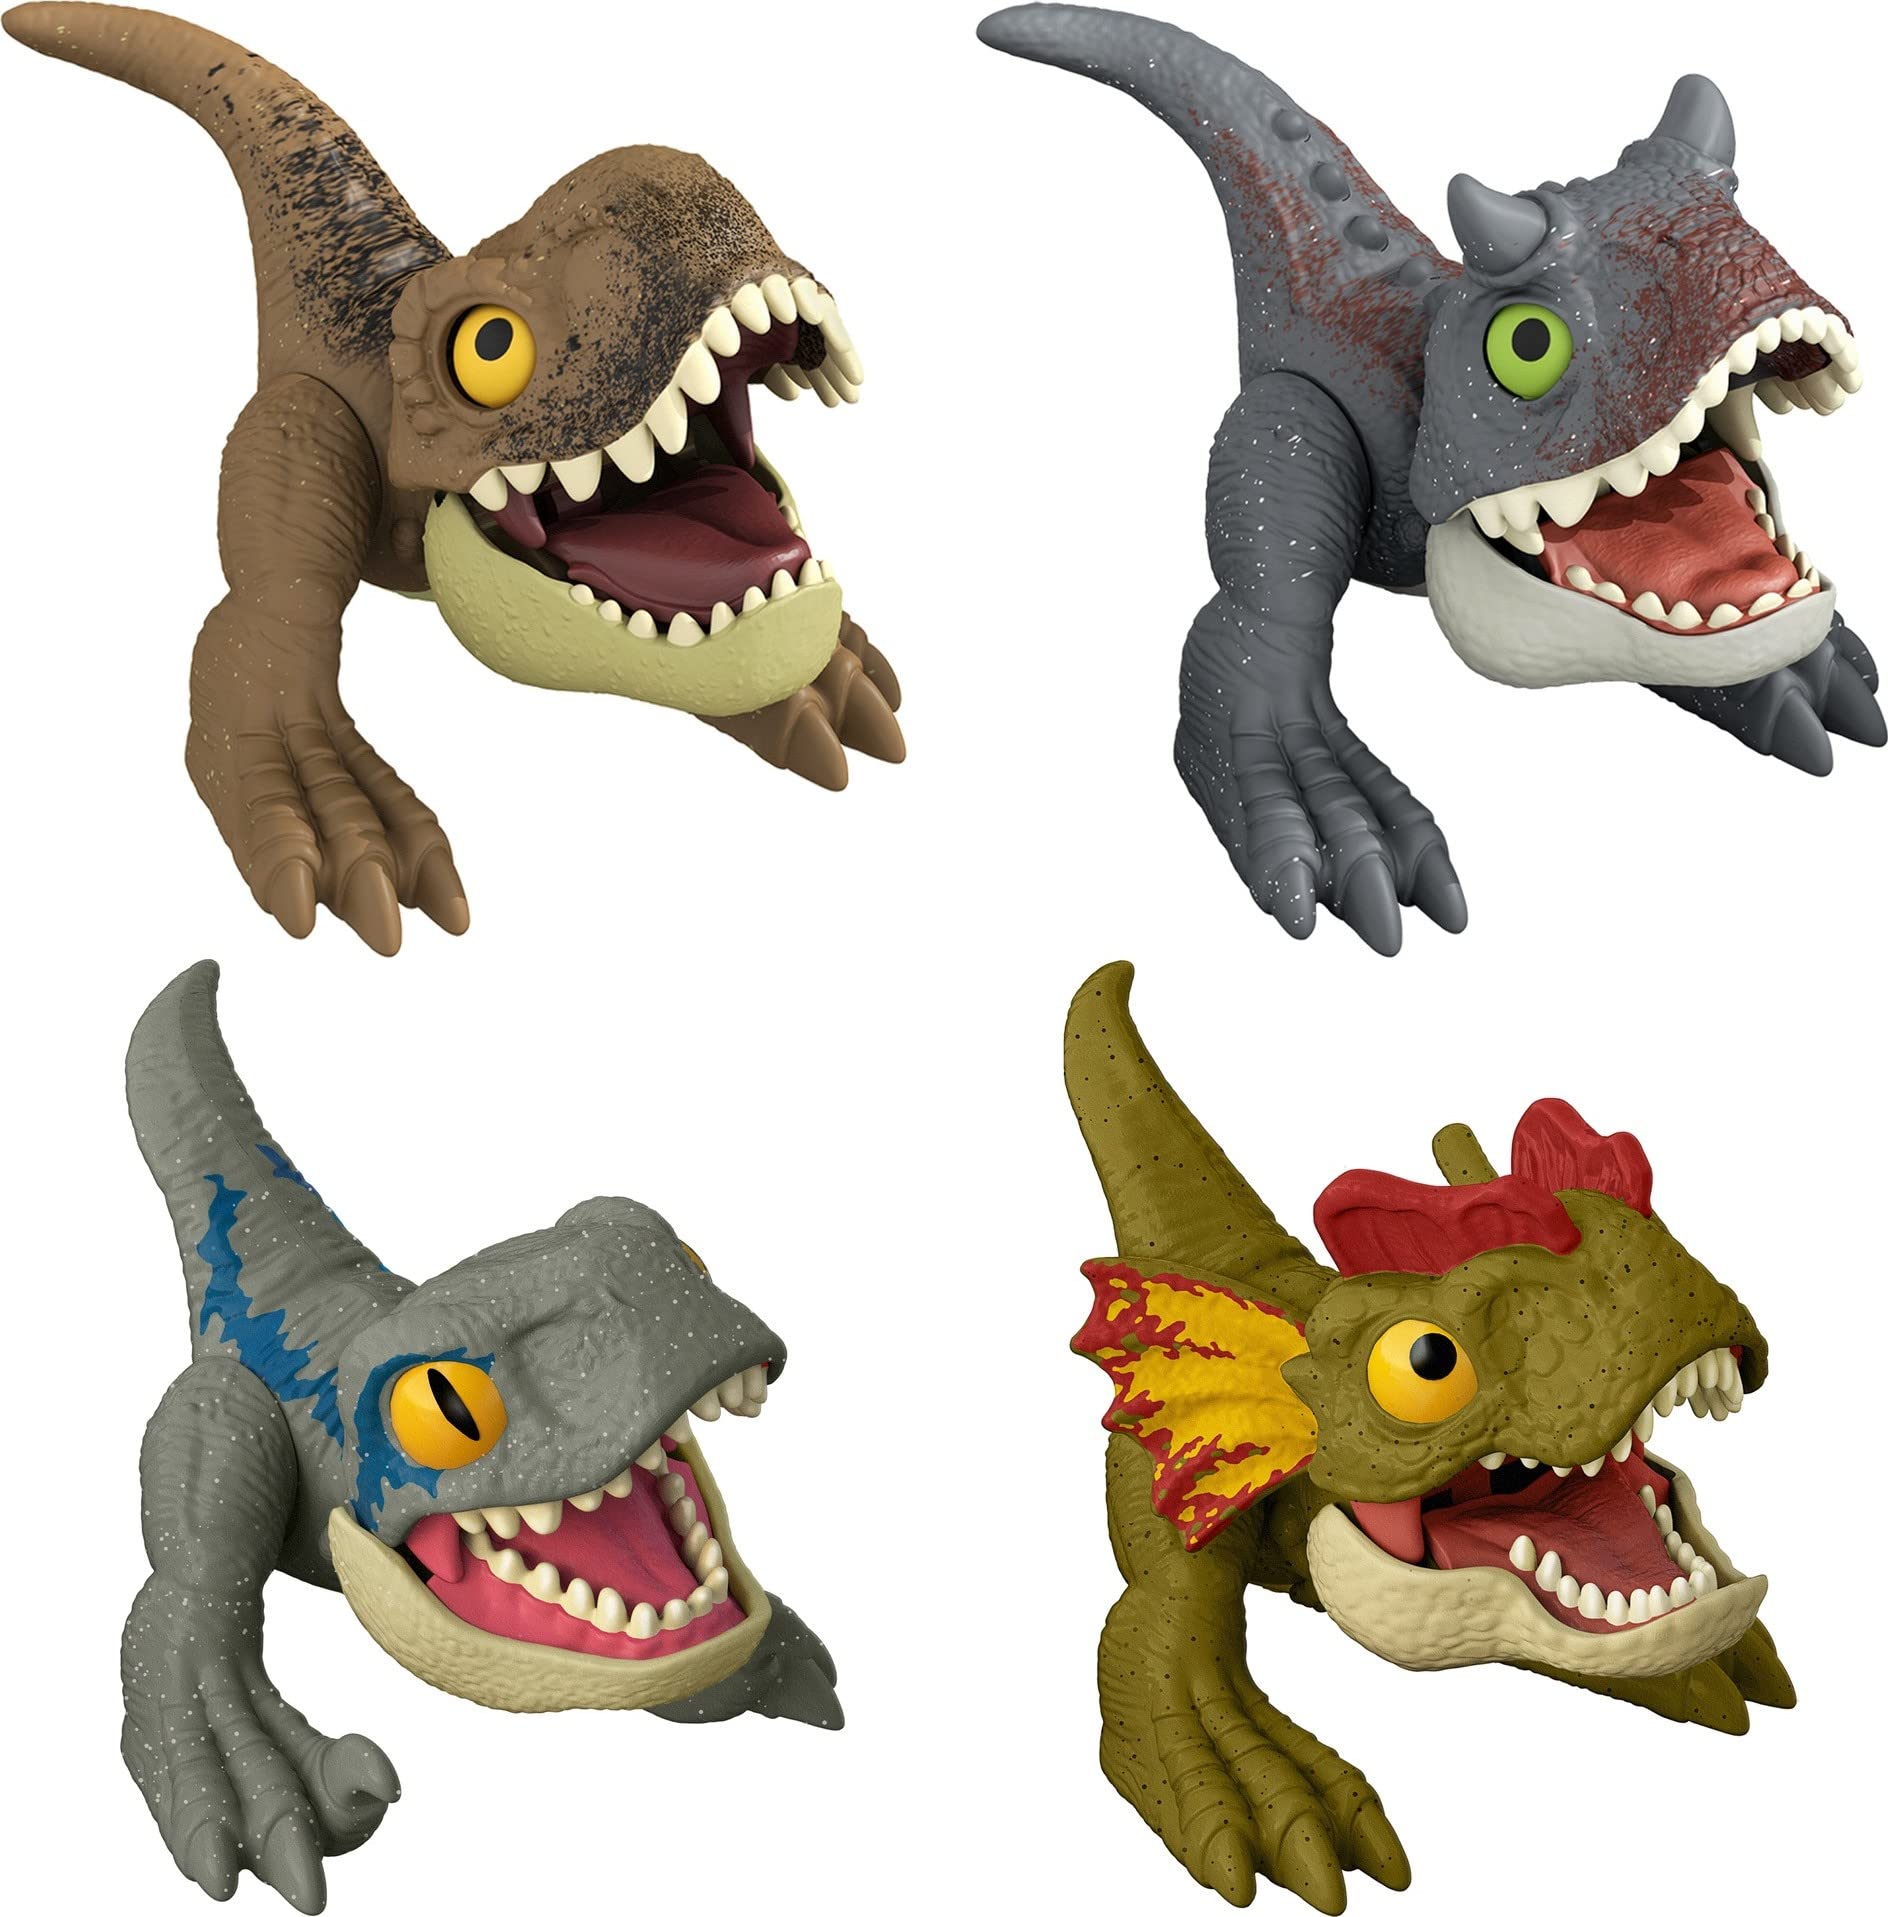 Jurassic World Dominion Uncaged Wild Pop Ups Dinosaur Toys, 4 Pack Collectible Figures - $7.25 - Amazon